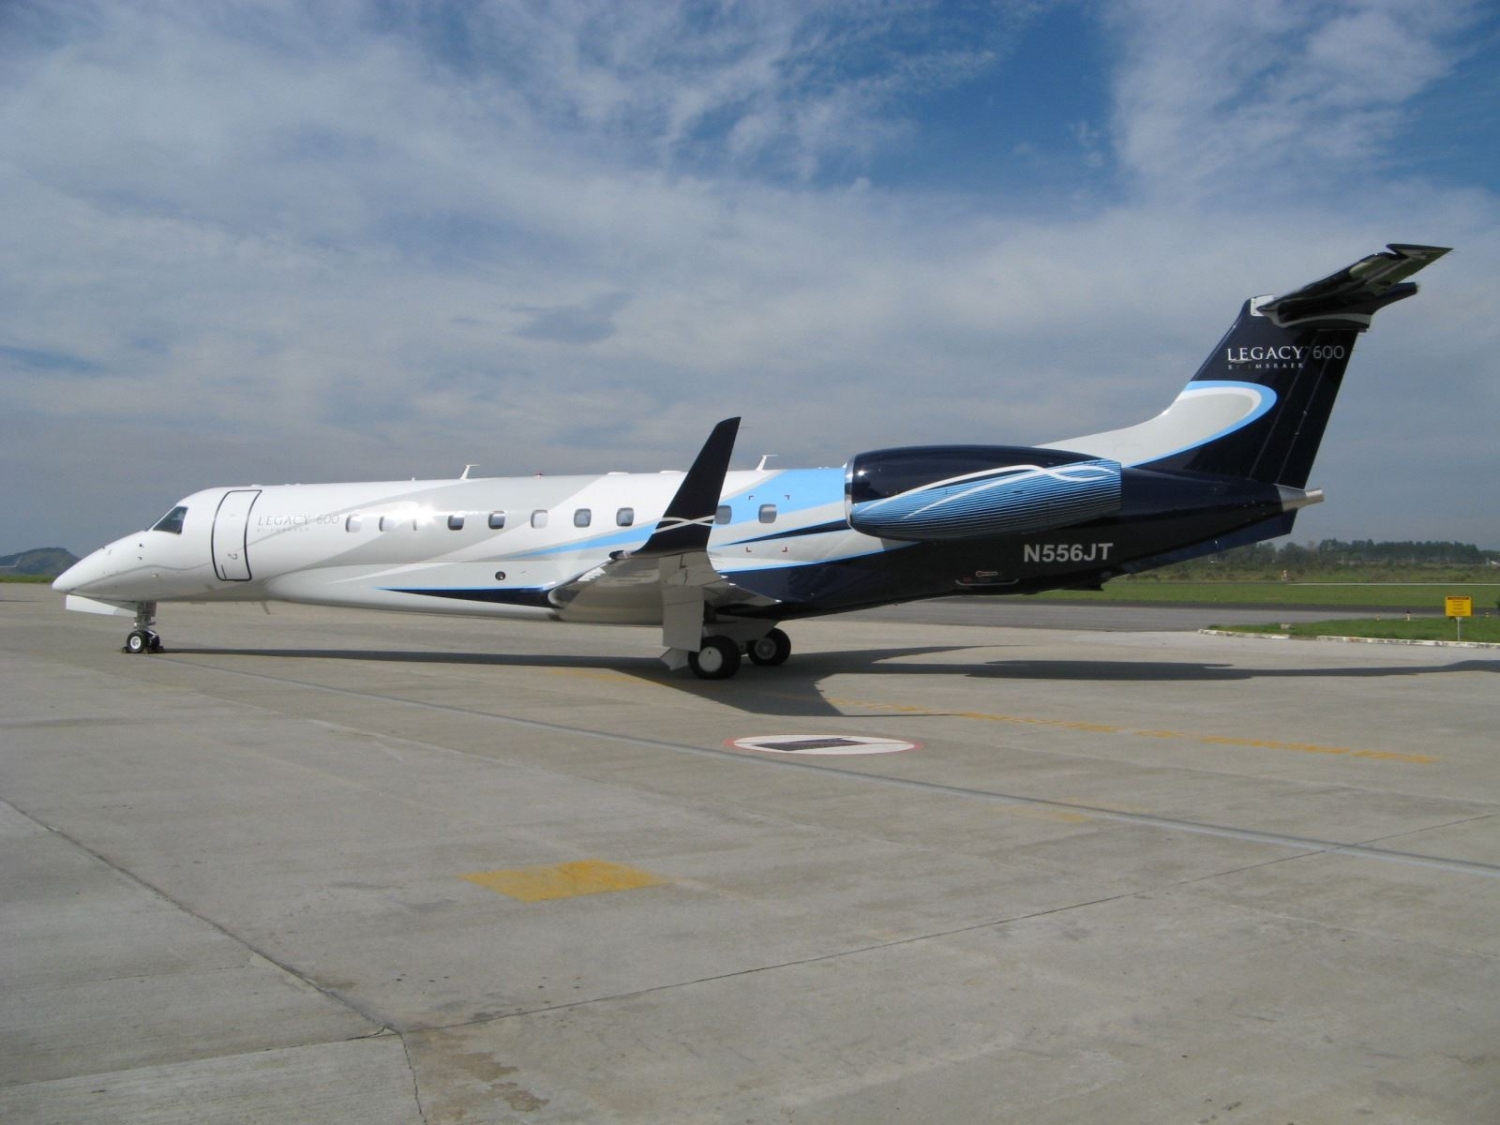 vietstar airlines tham gia vao thi truong van tai hang khong